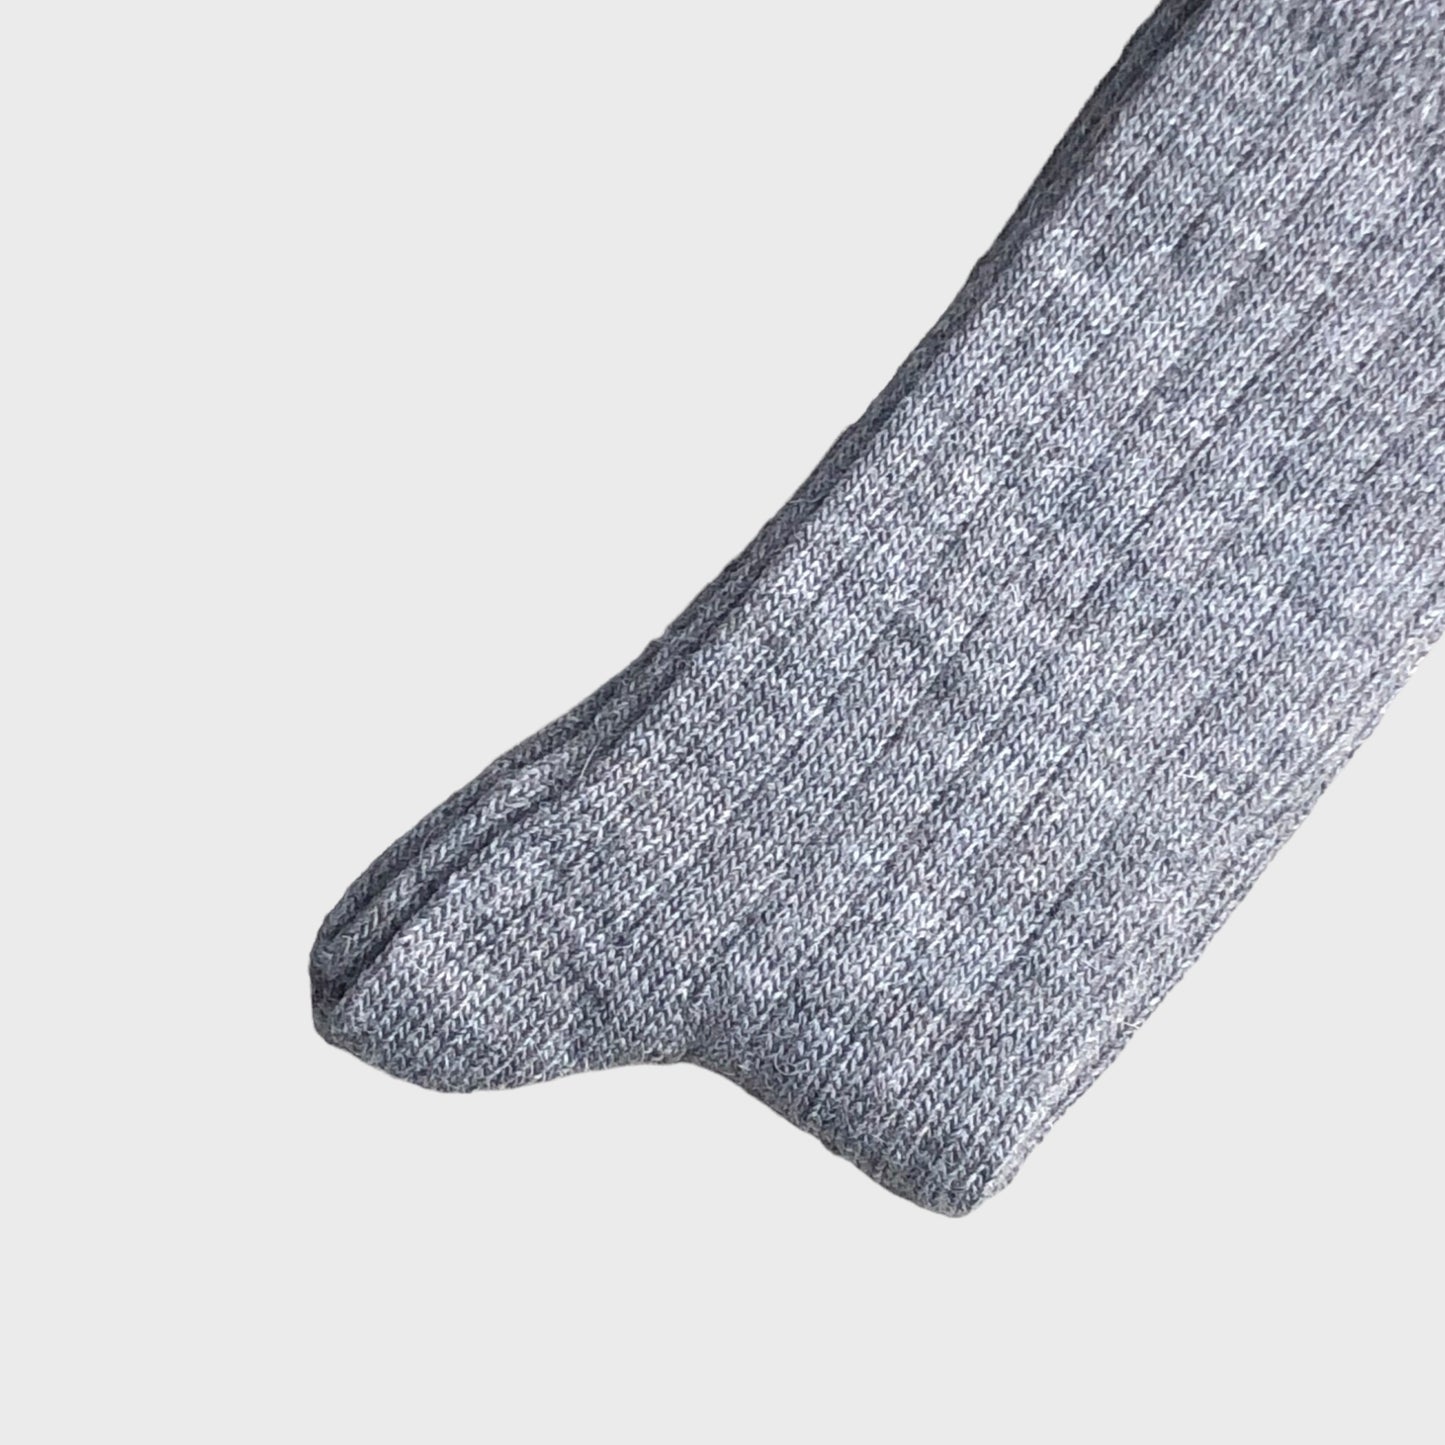 Heritage 9.1 - Grey Alpaca Socks